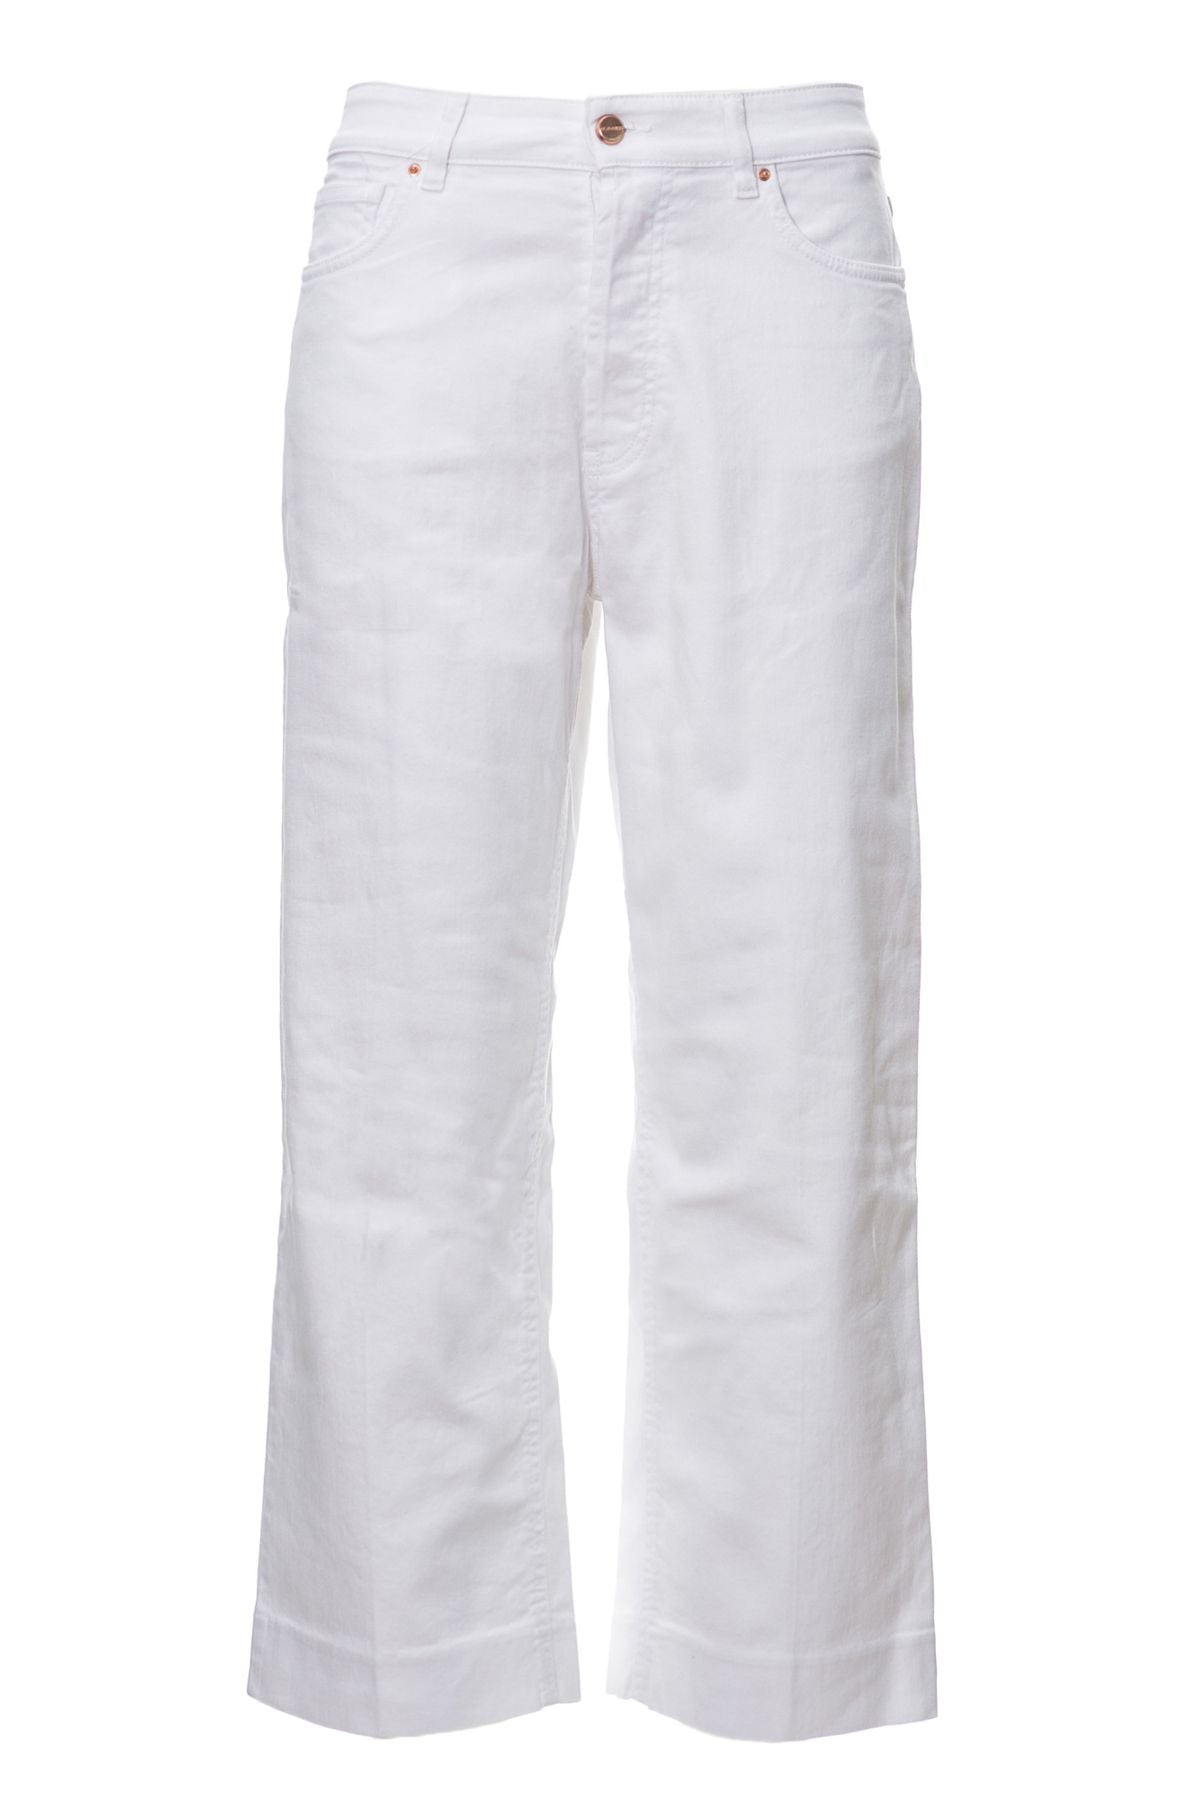 DONTHEFULLER Jeans Primavera/Estate Cotone